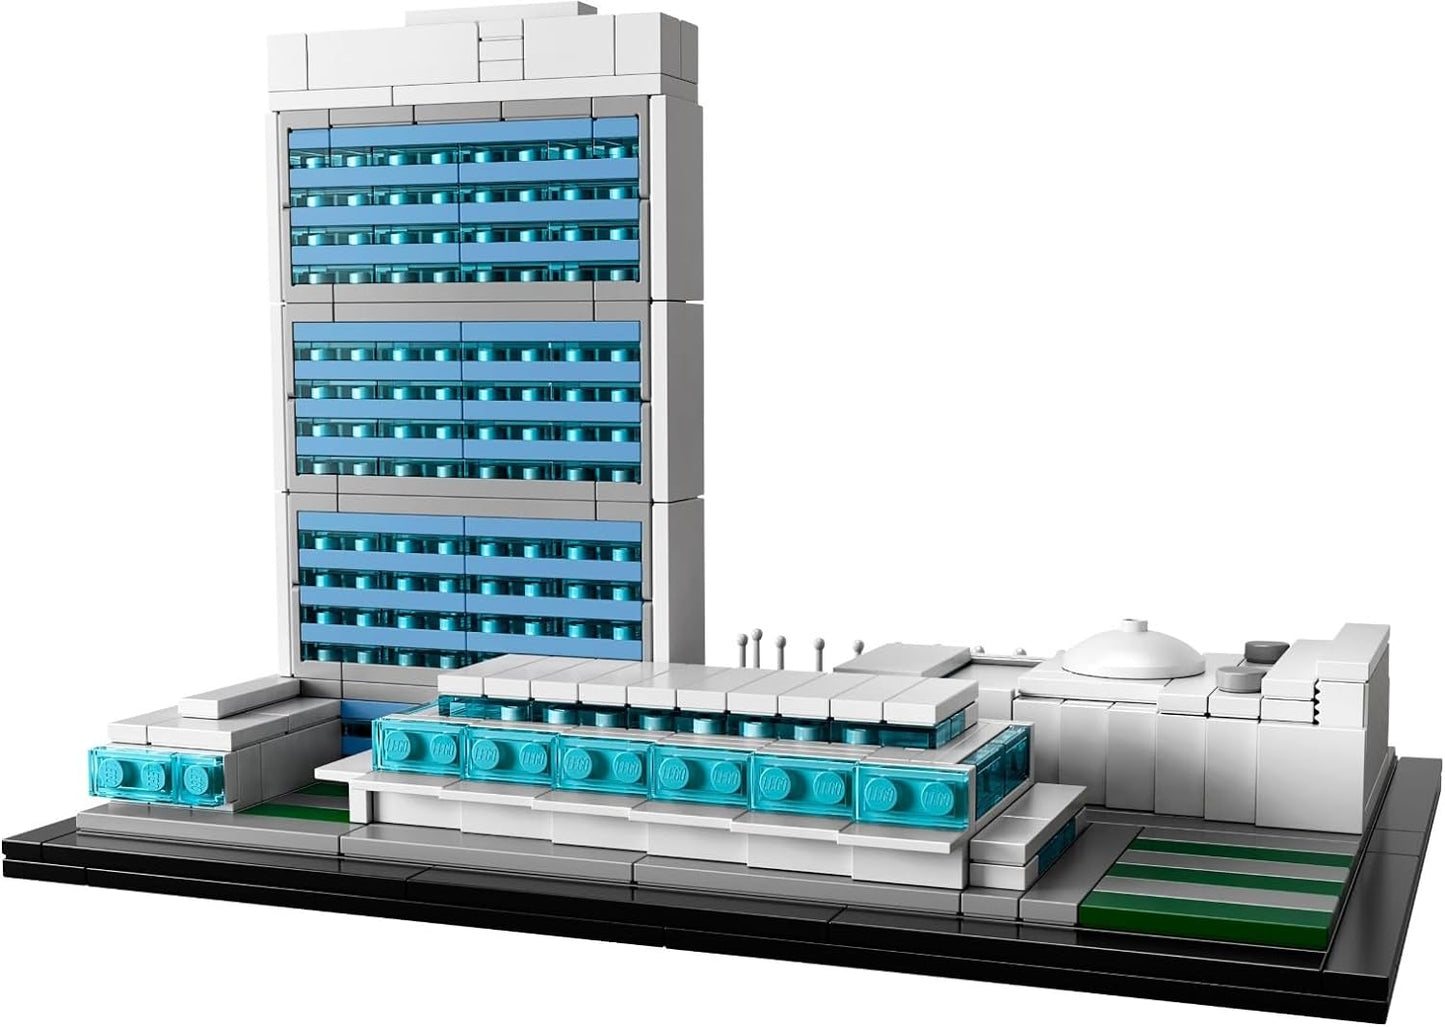 LEGO Architecture United Nations Headquarters